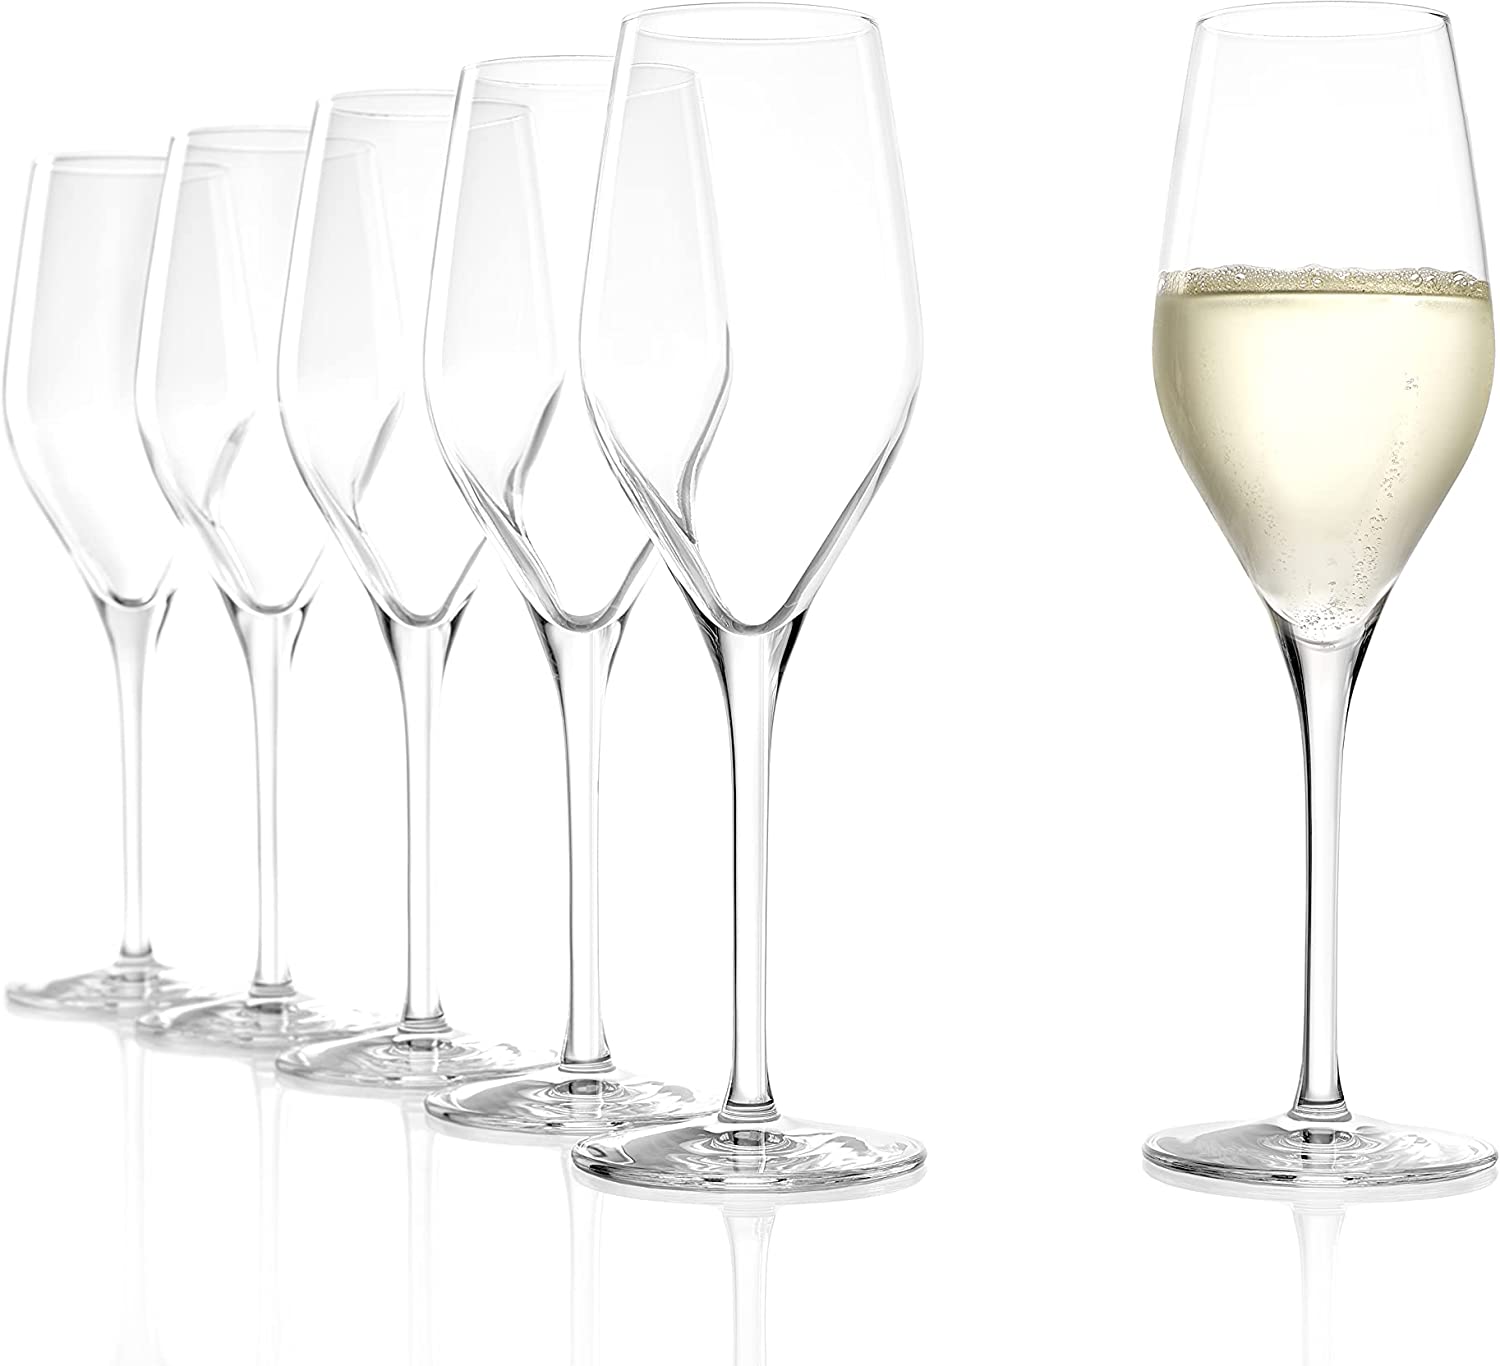 Stölzle Lausitz Exquisit Champagne Flute, 265ml, Set of 6, Dishwasher Safe: Elegant Champagne Glasses for some special moments